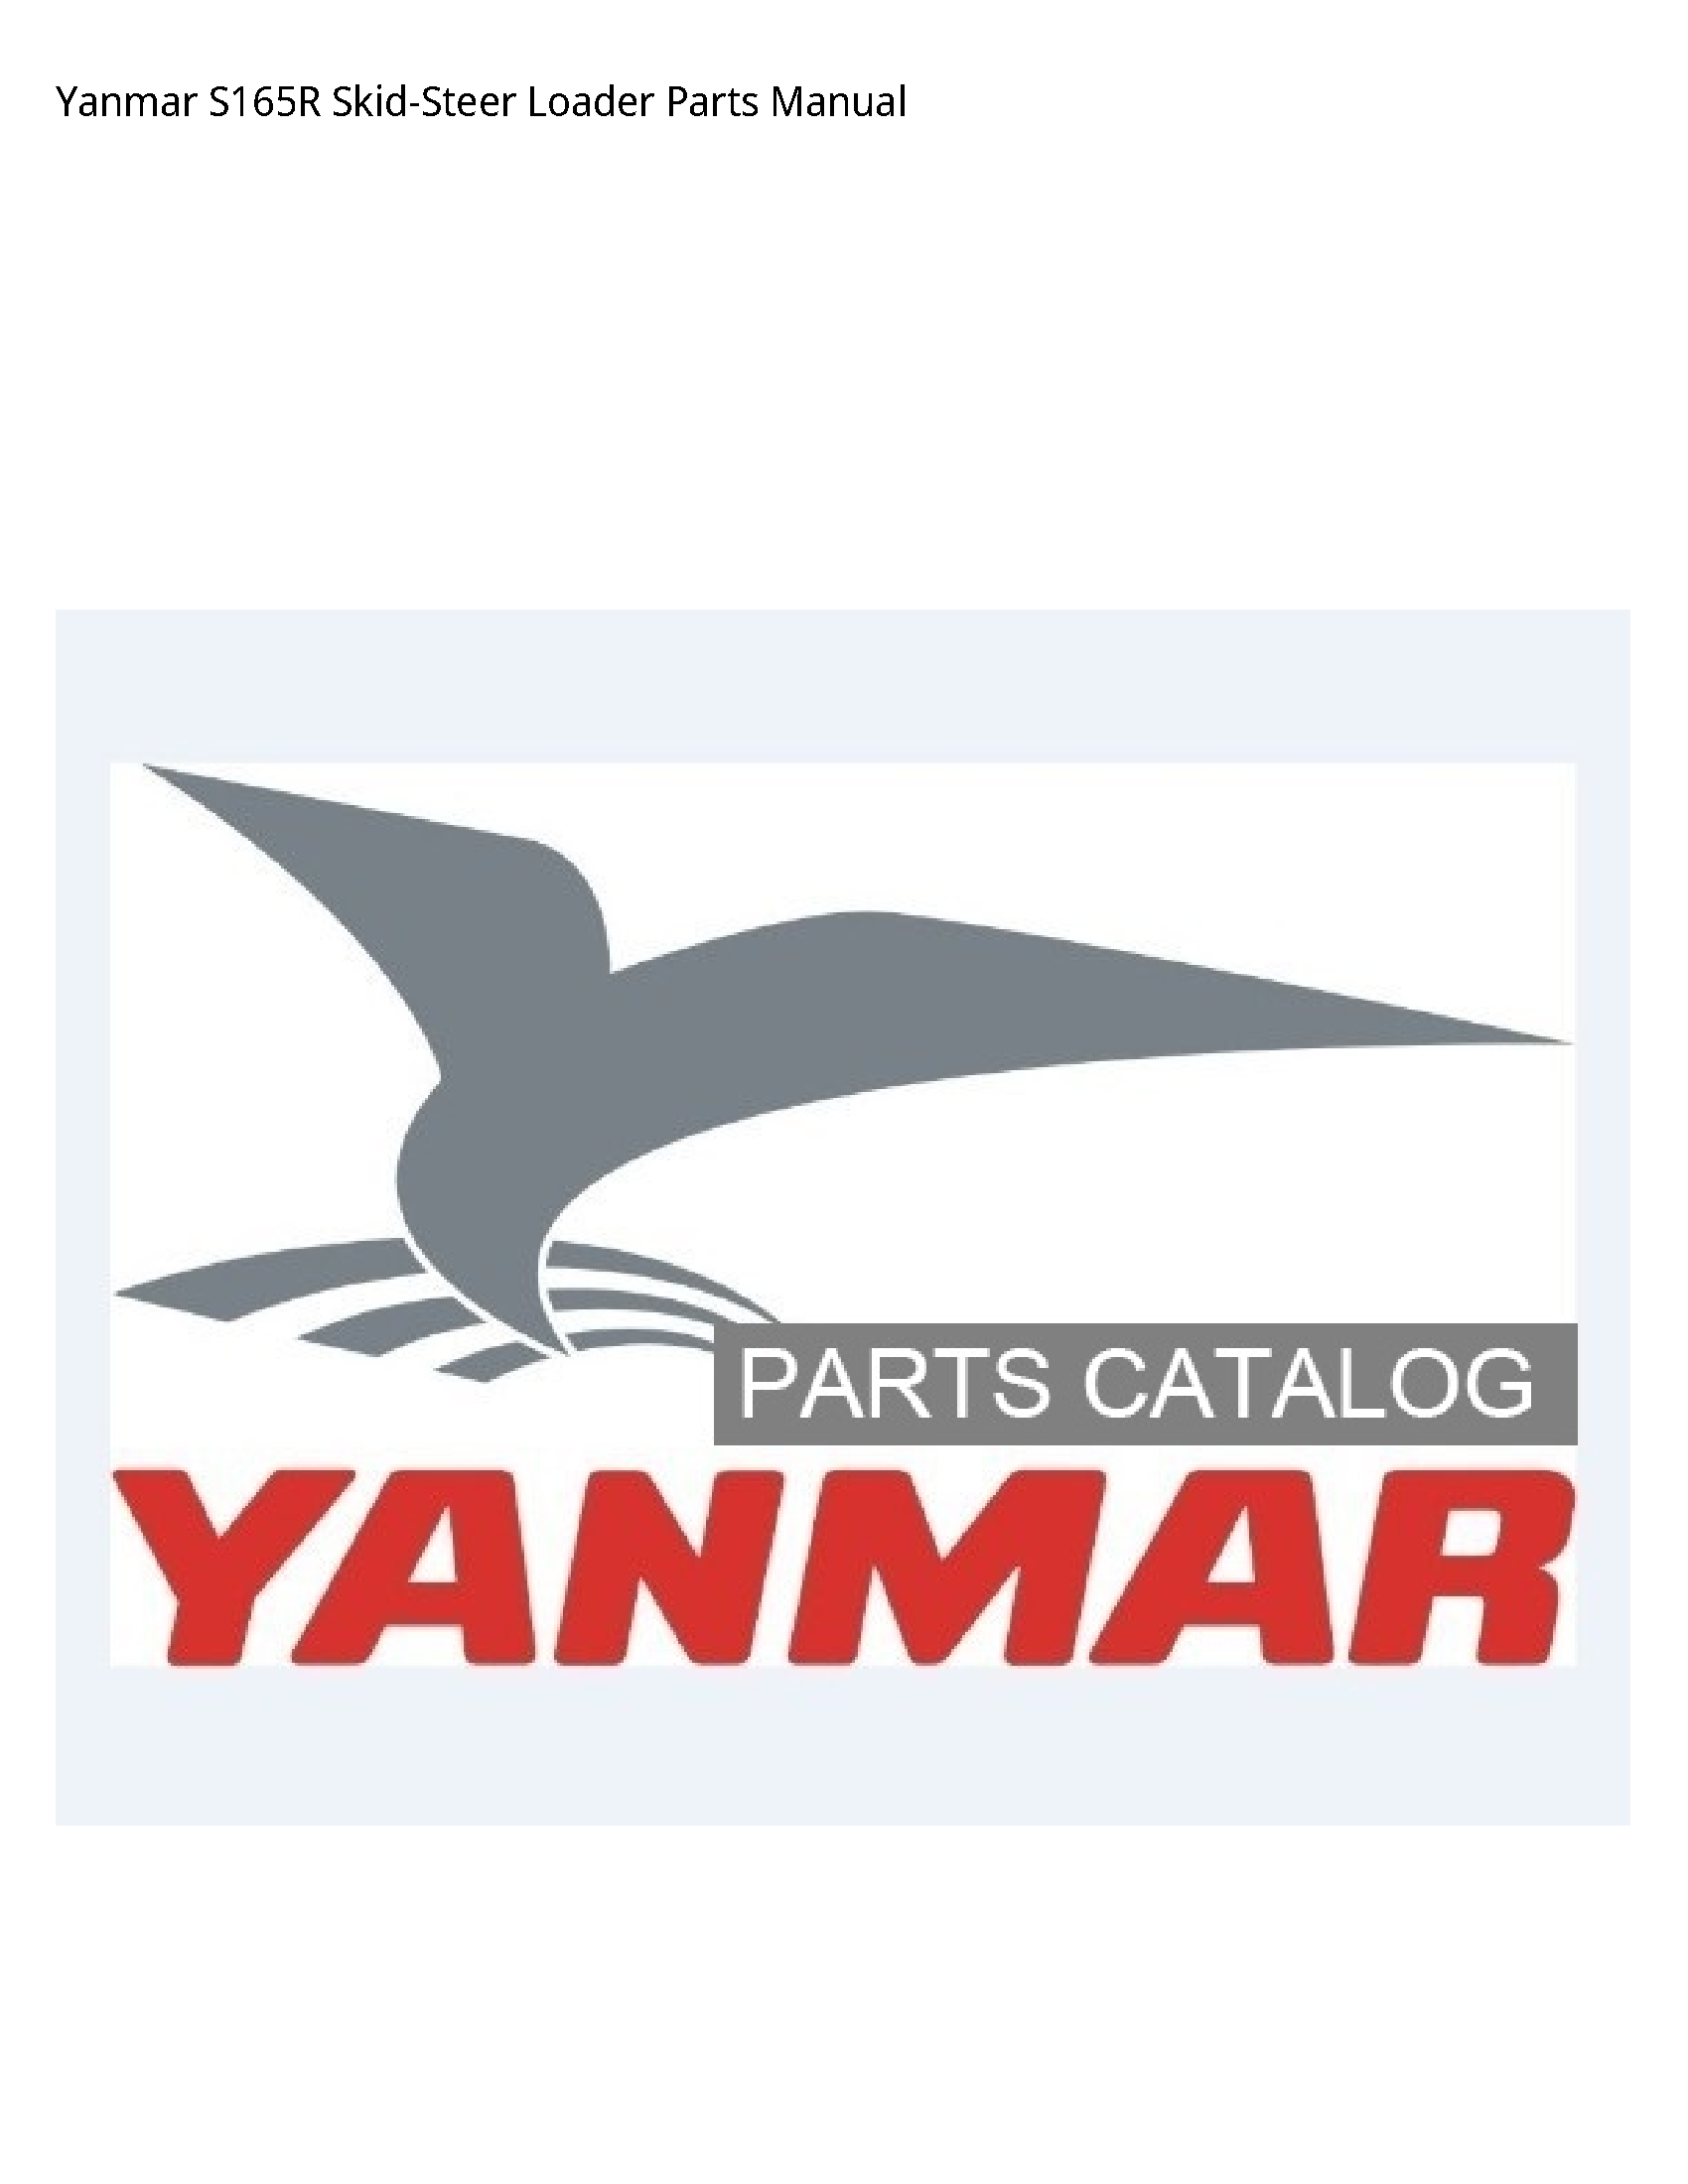 Yanmar S165R Skid-Steer Loader Parts manual